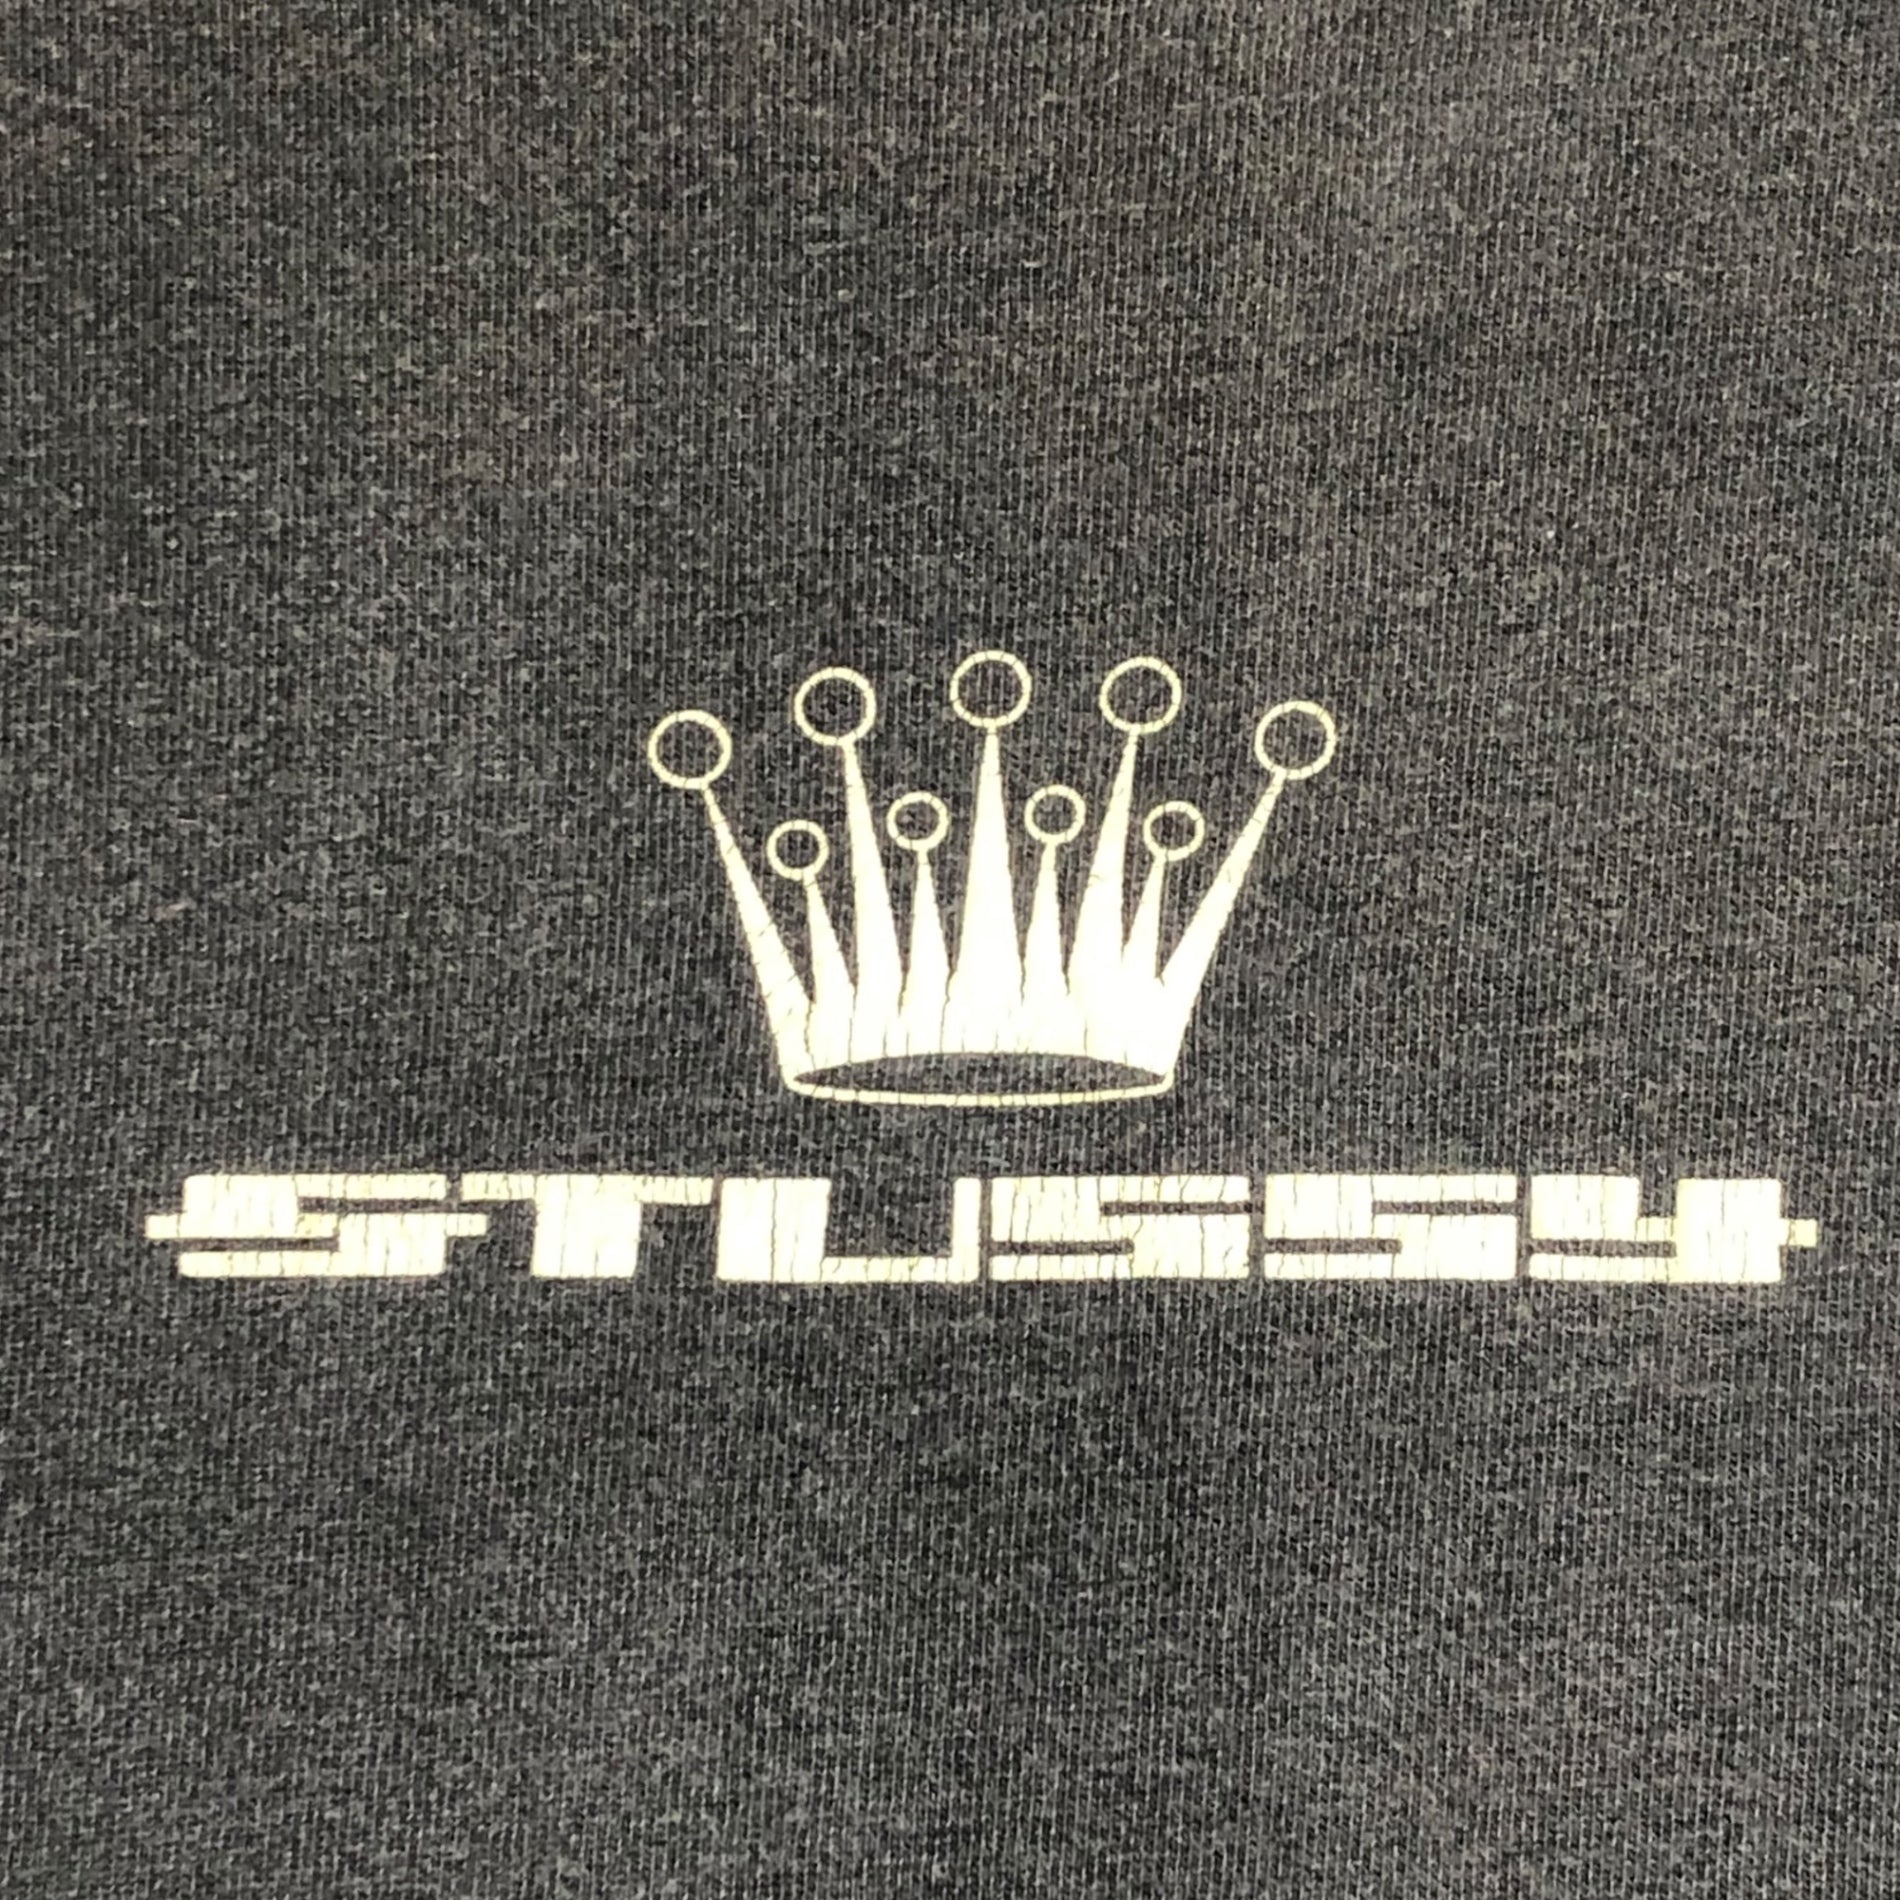 STUSSY(ステューシー) 80's VINTAGE crown logo 王冠 ロゴ Tシャツ 黒タグ SIZE L グレー×ホワイト 80年代 OLD STUSSY ショーンフォント